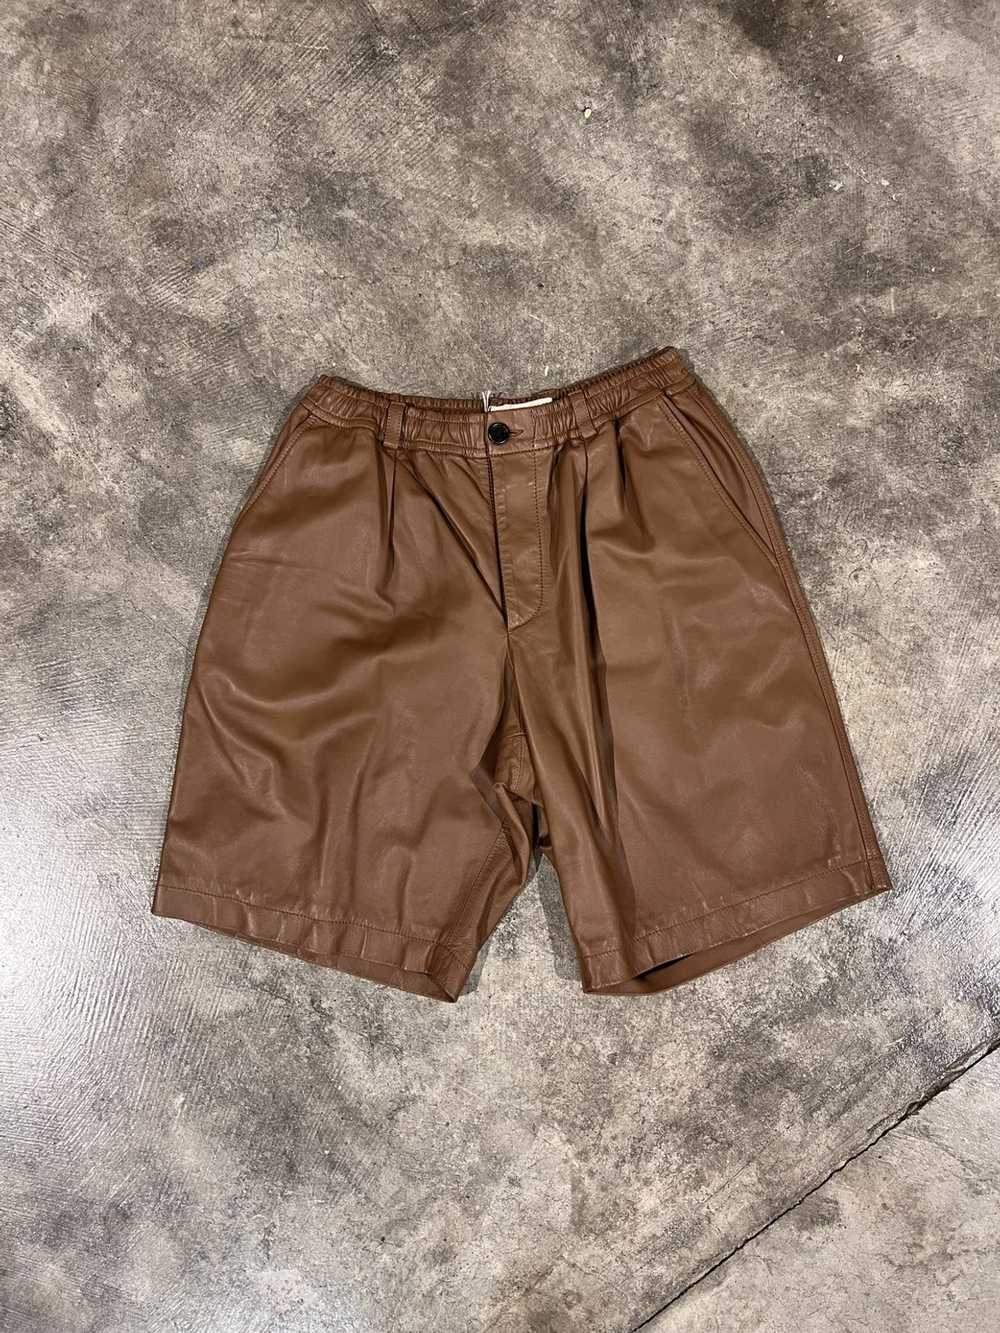 Marni Marni Leather Shorts - image 1